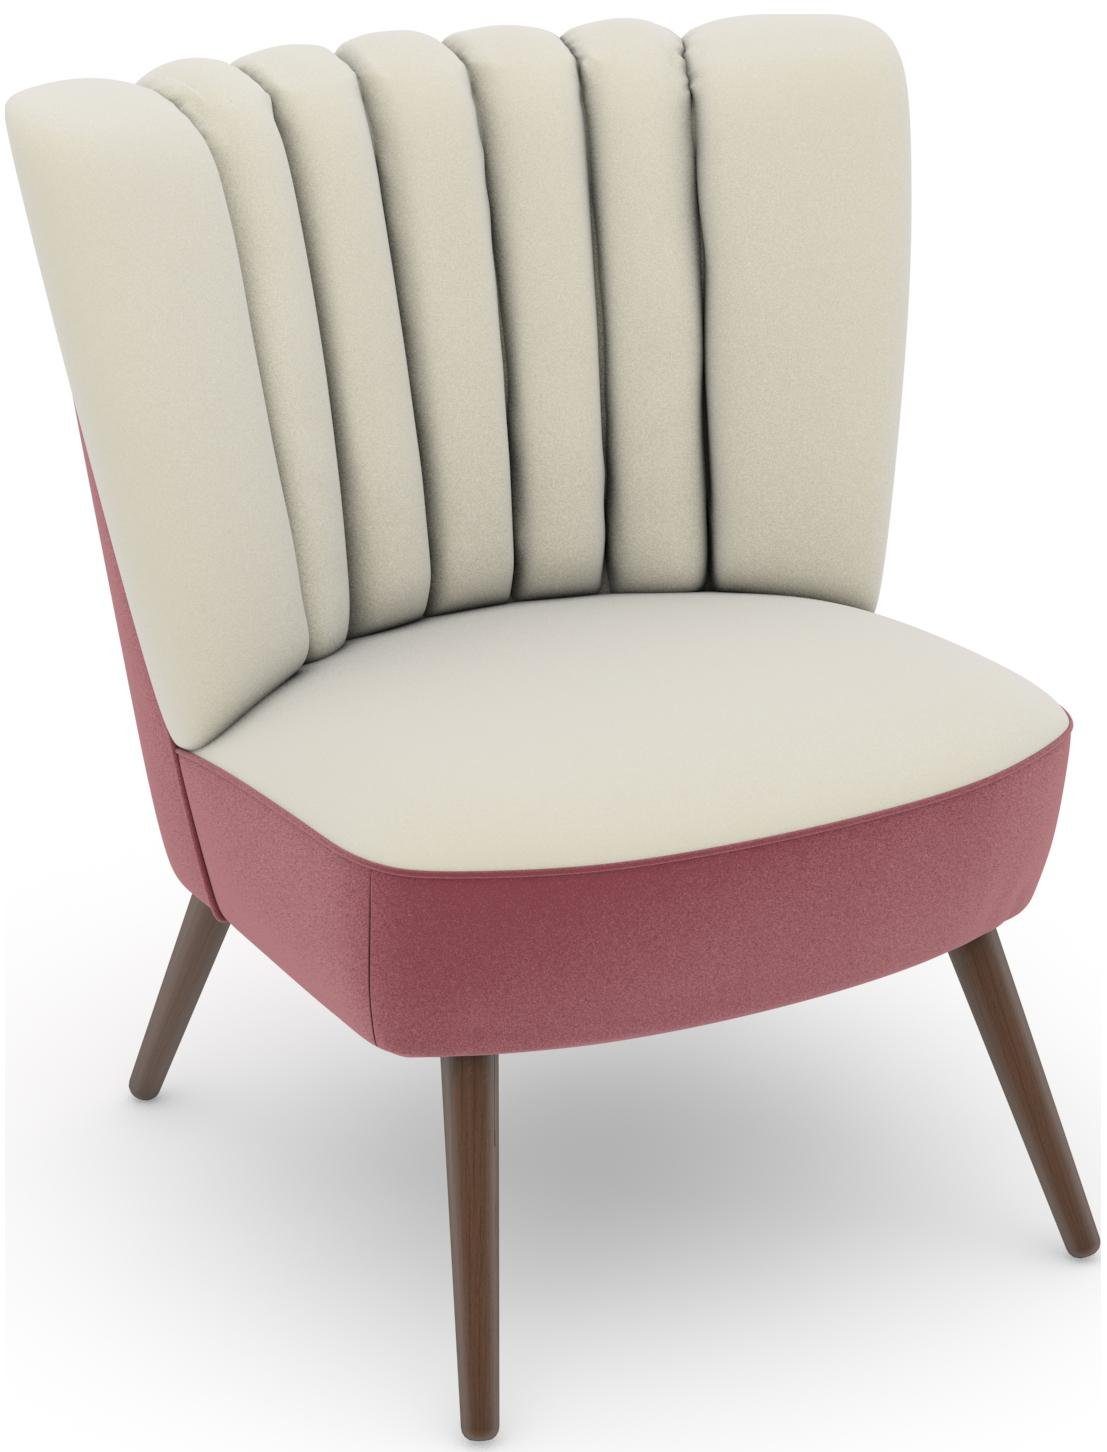 Max Winzer® Fauteuil Aspen - Build-a-chair Aspen in retro-look, om zelf te stylen